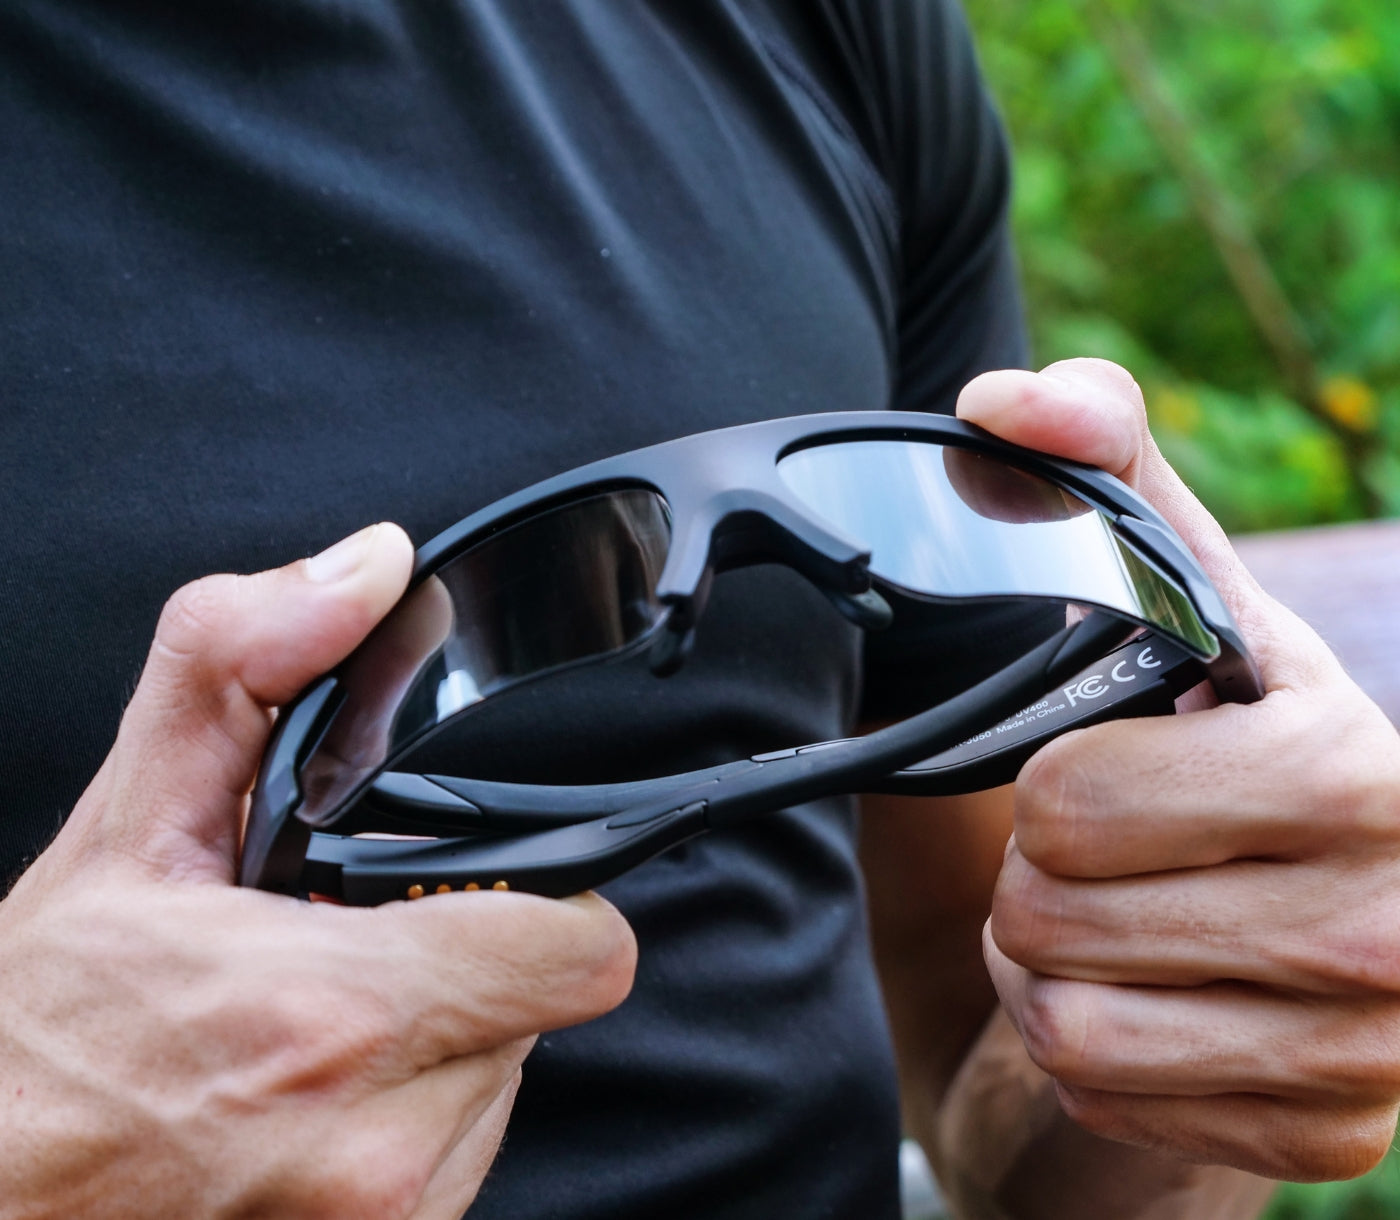 Flash 3050 Slide-to-dim sunglasses